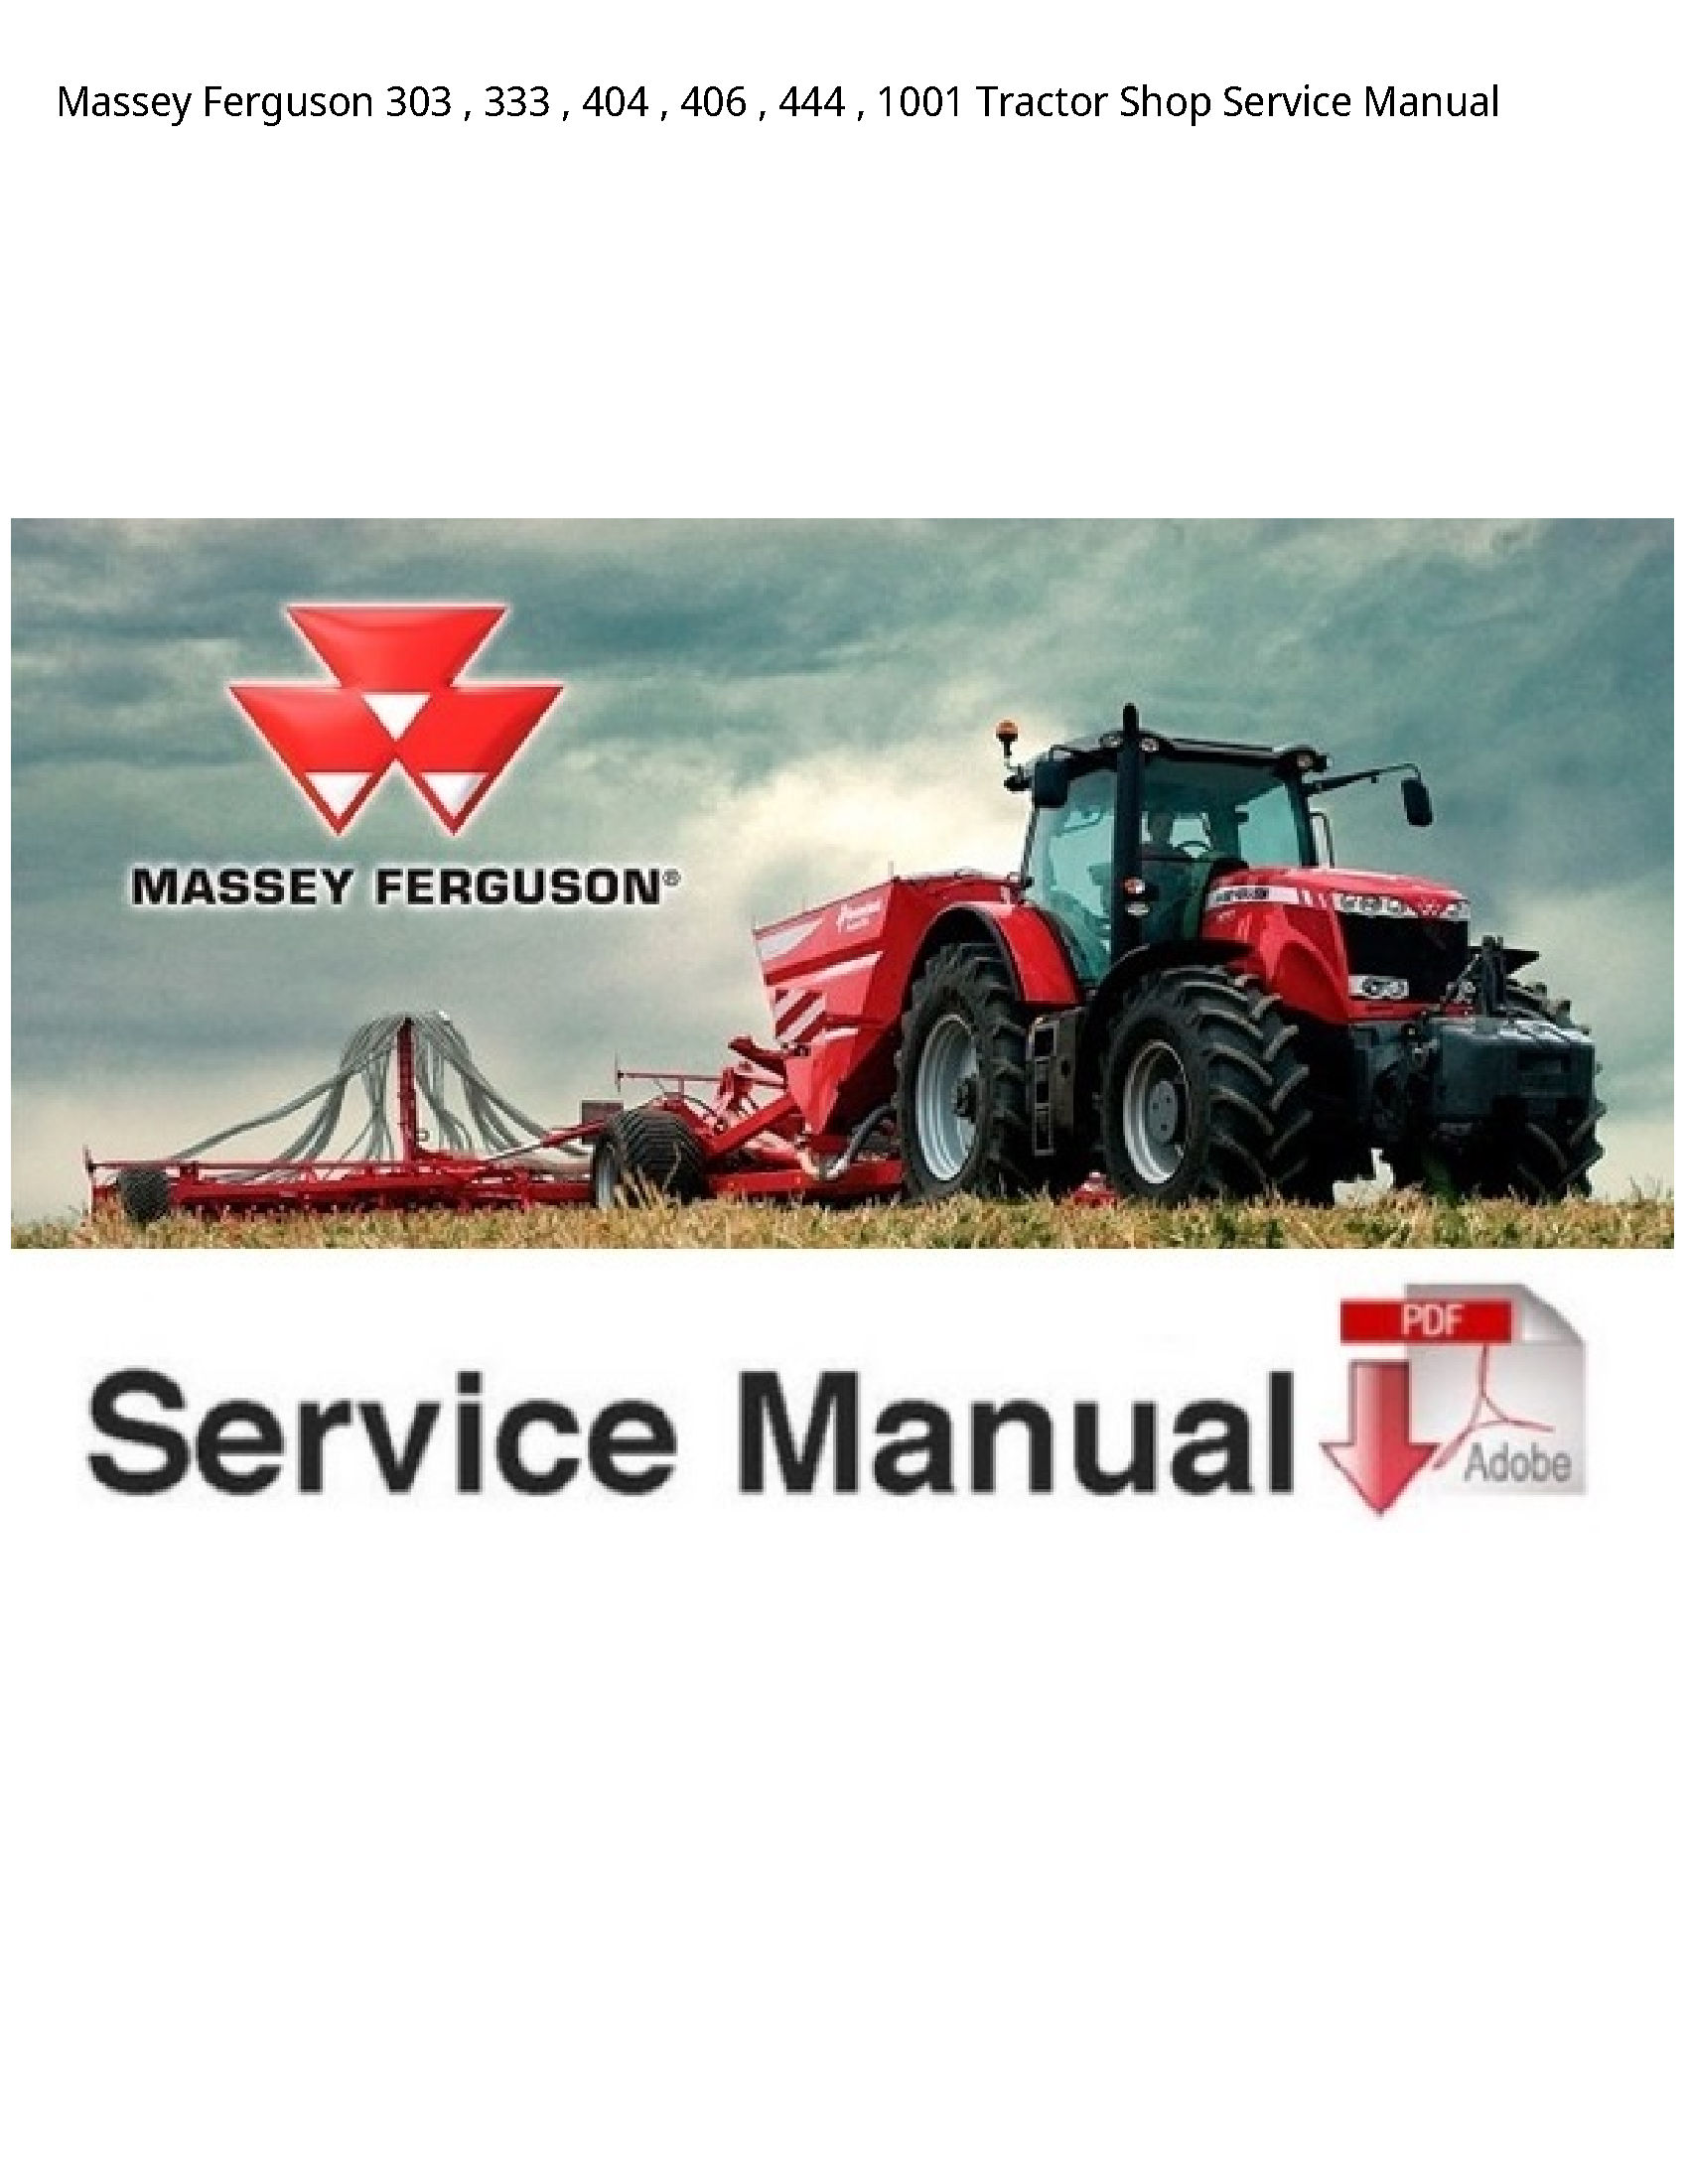 Massey Ferguson 303 Tractor Shop Service manual